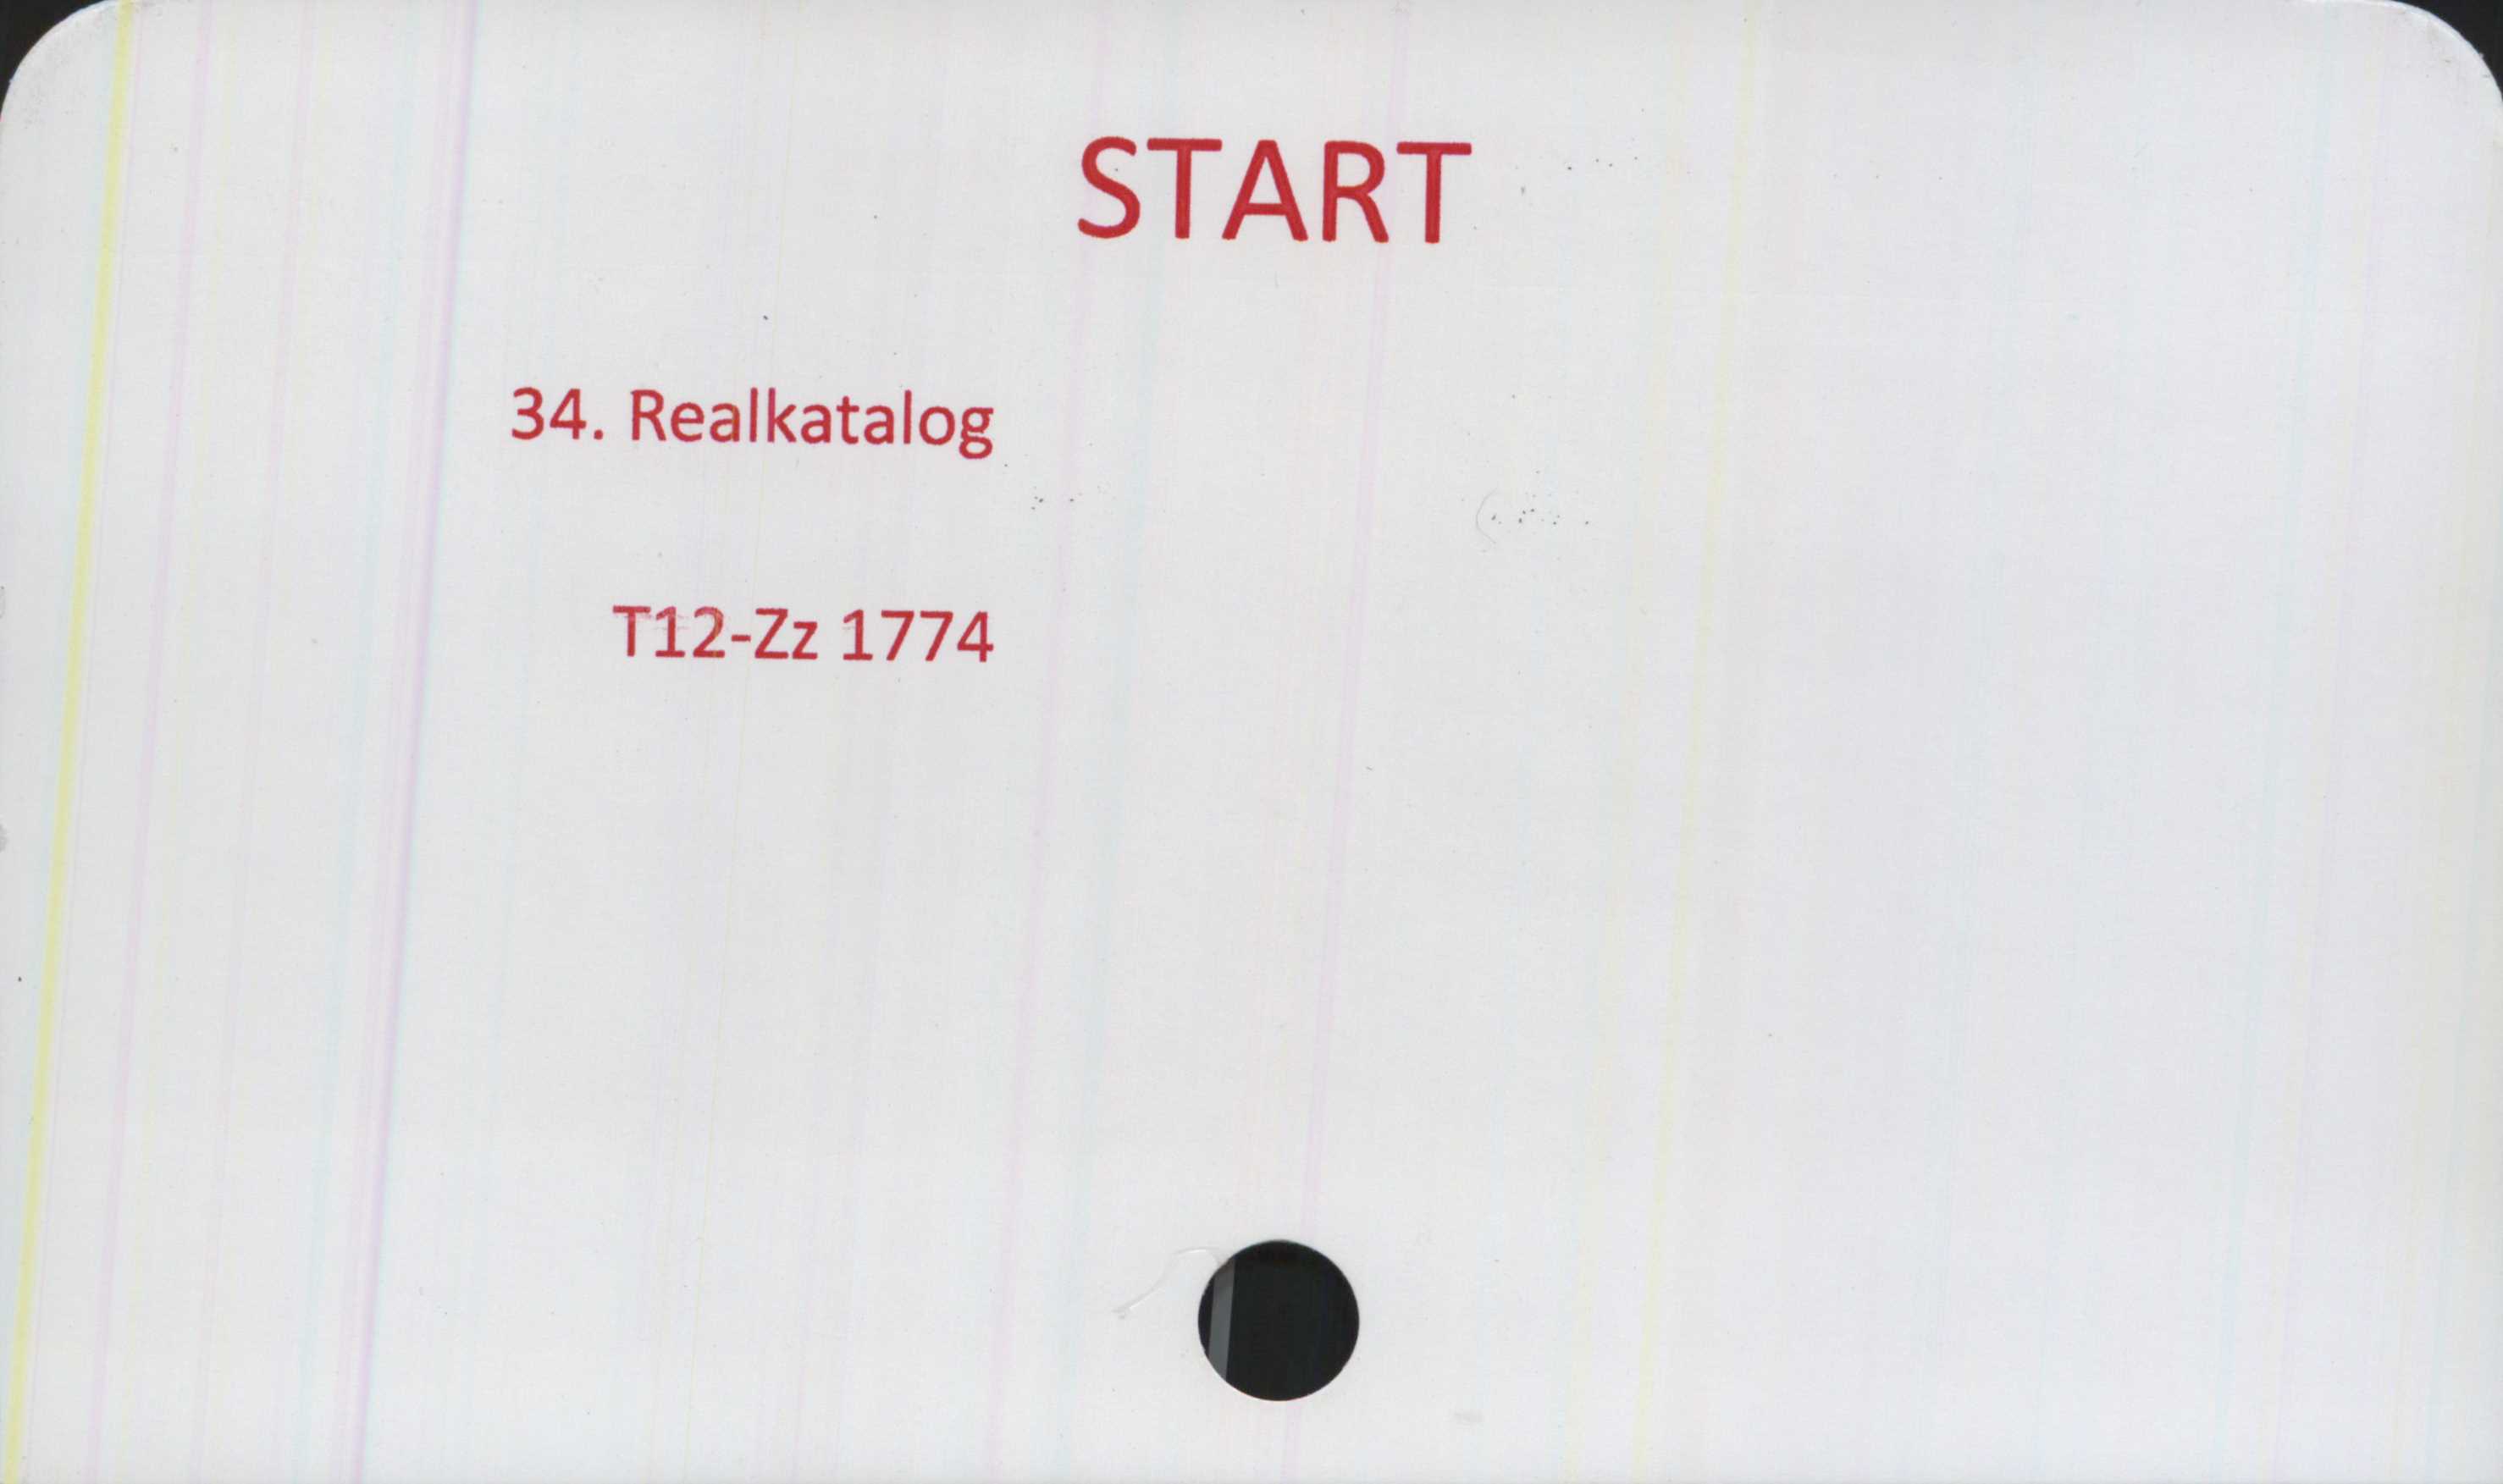  ﻿r

34. Realkatalog
T12-Zz 1774

START